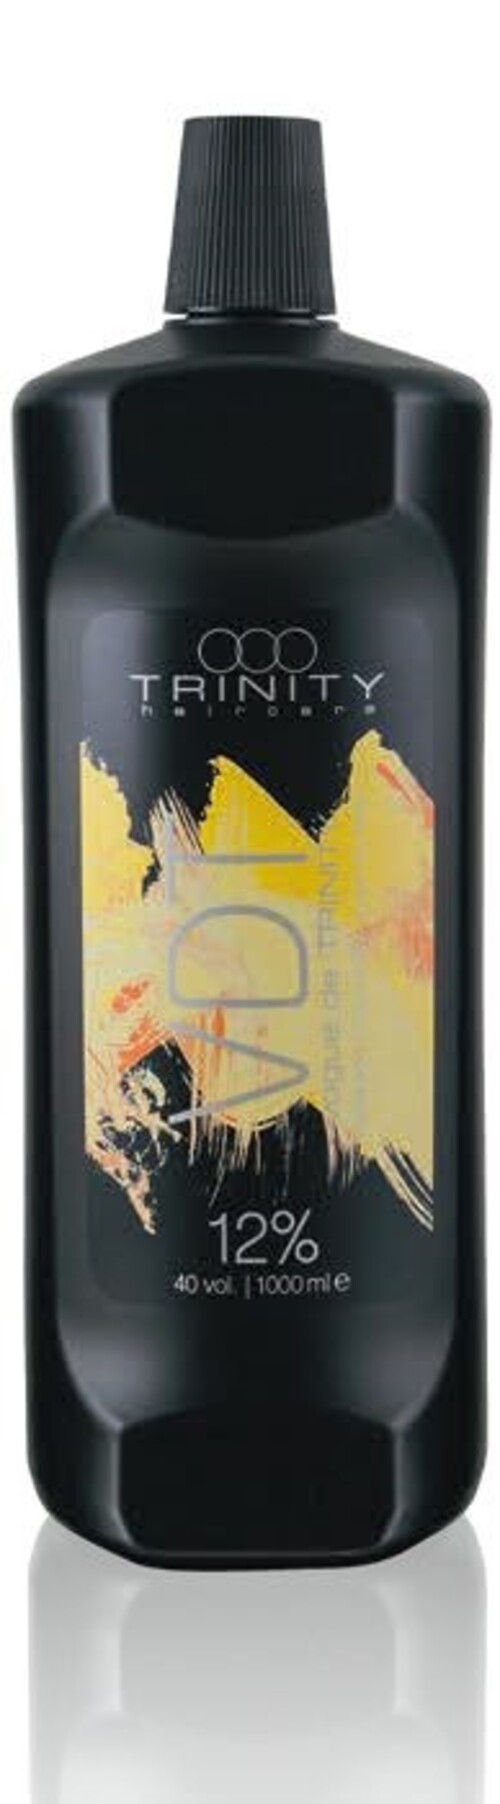 Крем-оксидант для краски Trinity 12% VDT 1л